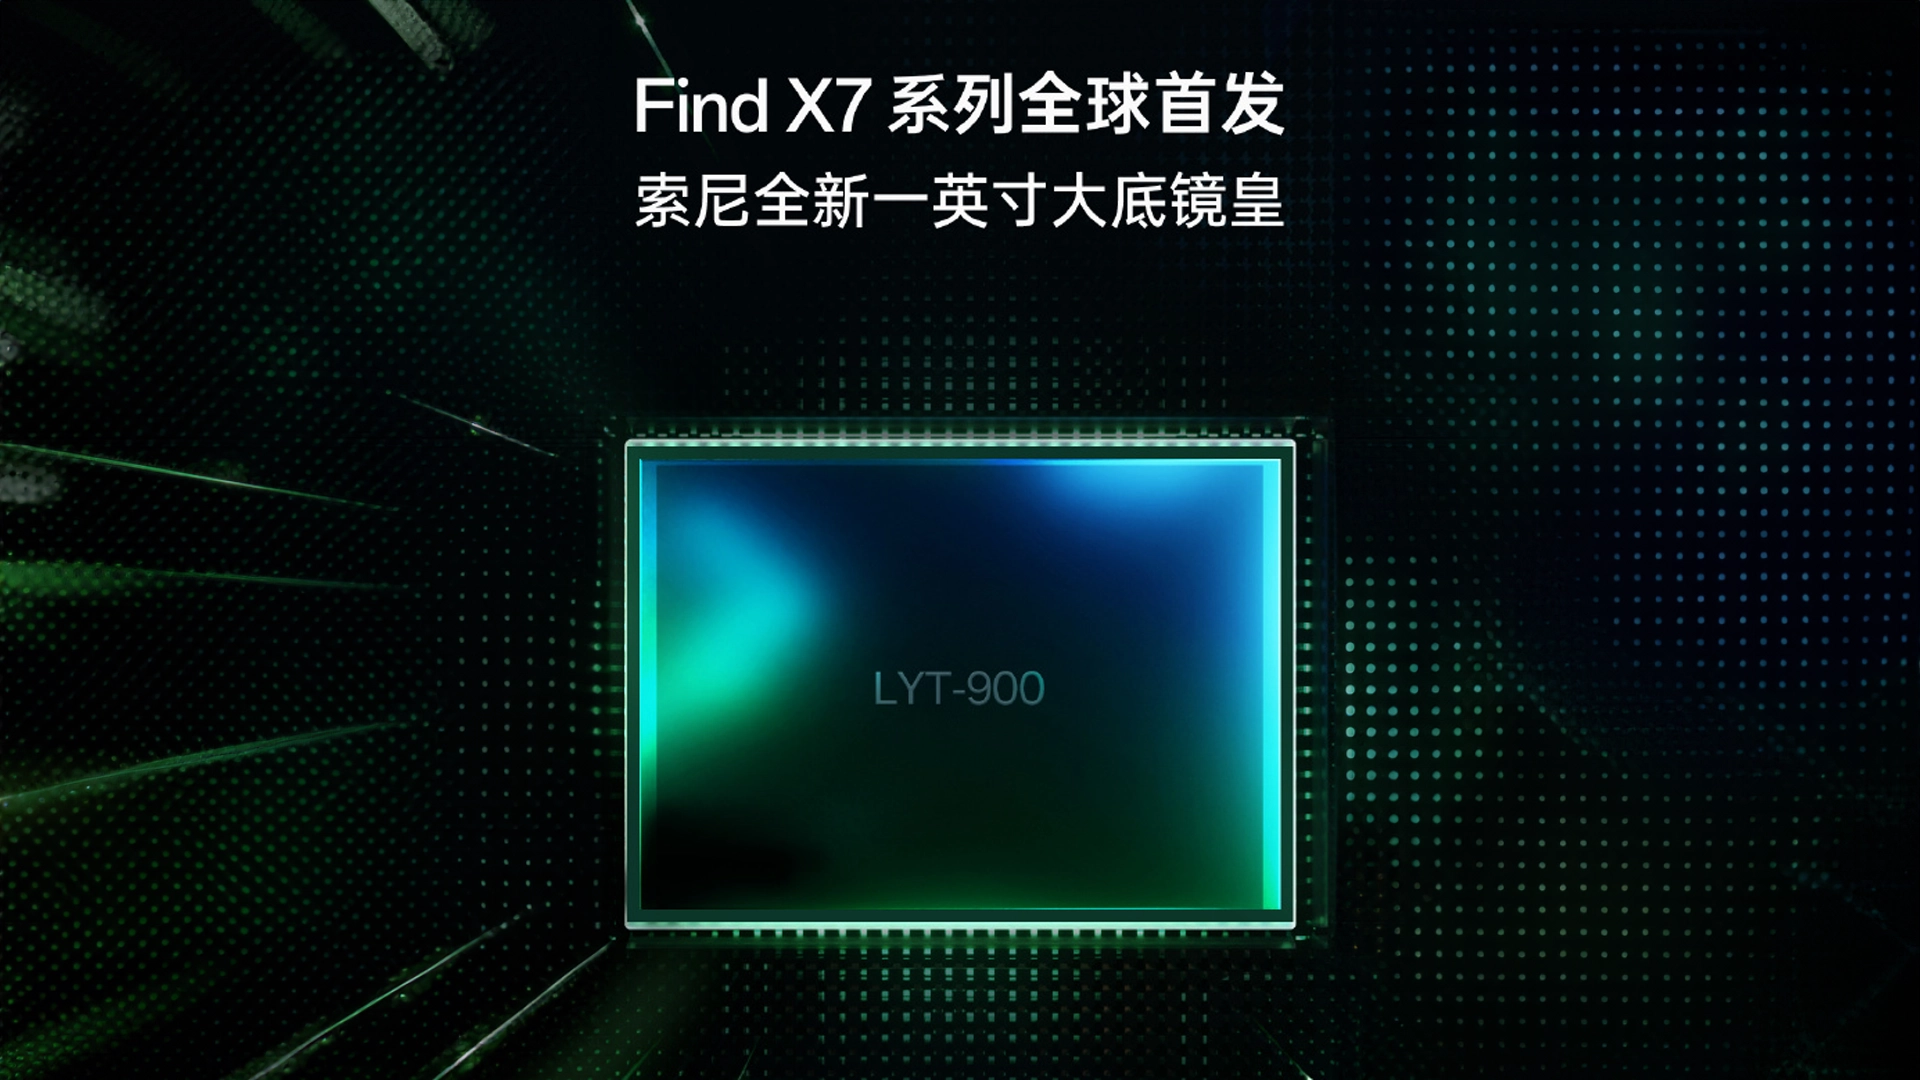 Oppo Find X7 Akan Menggunakan Sensor Kamera Sony LYT-900